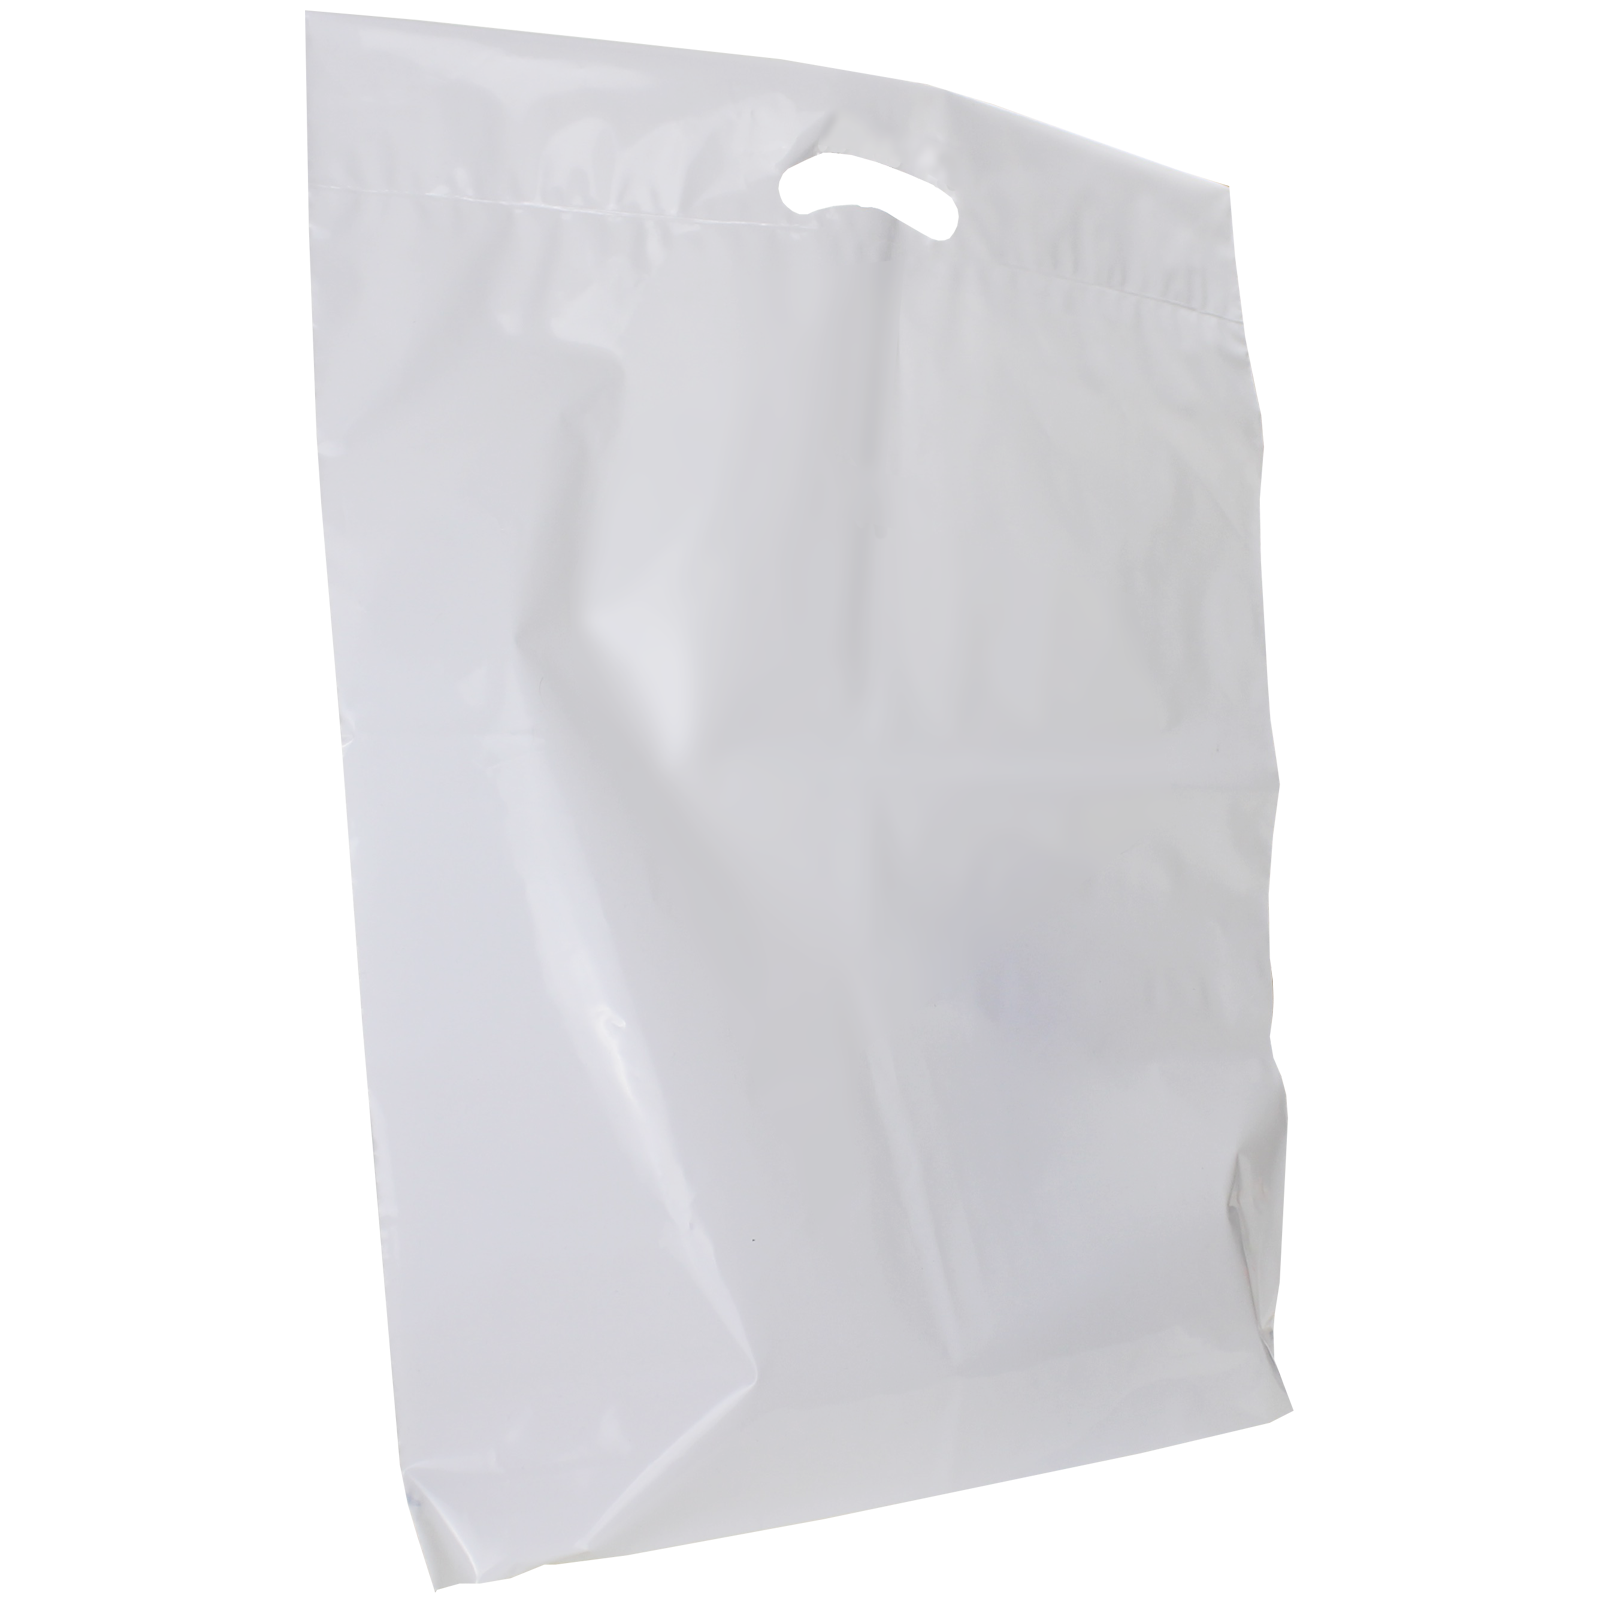 large plastic bags